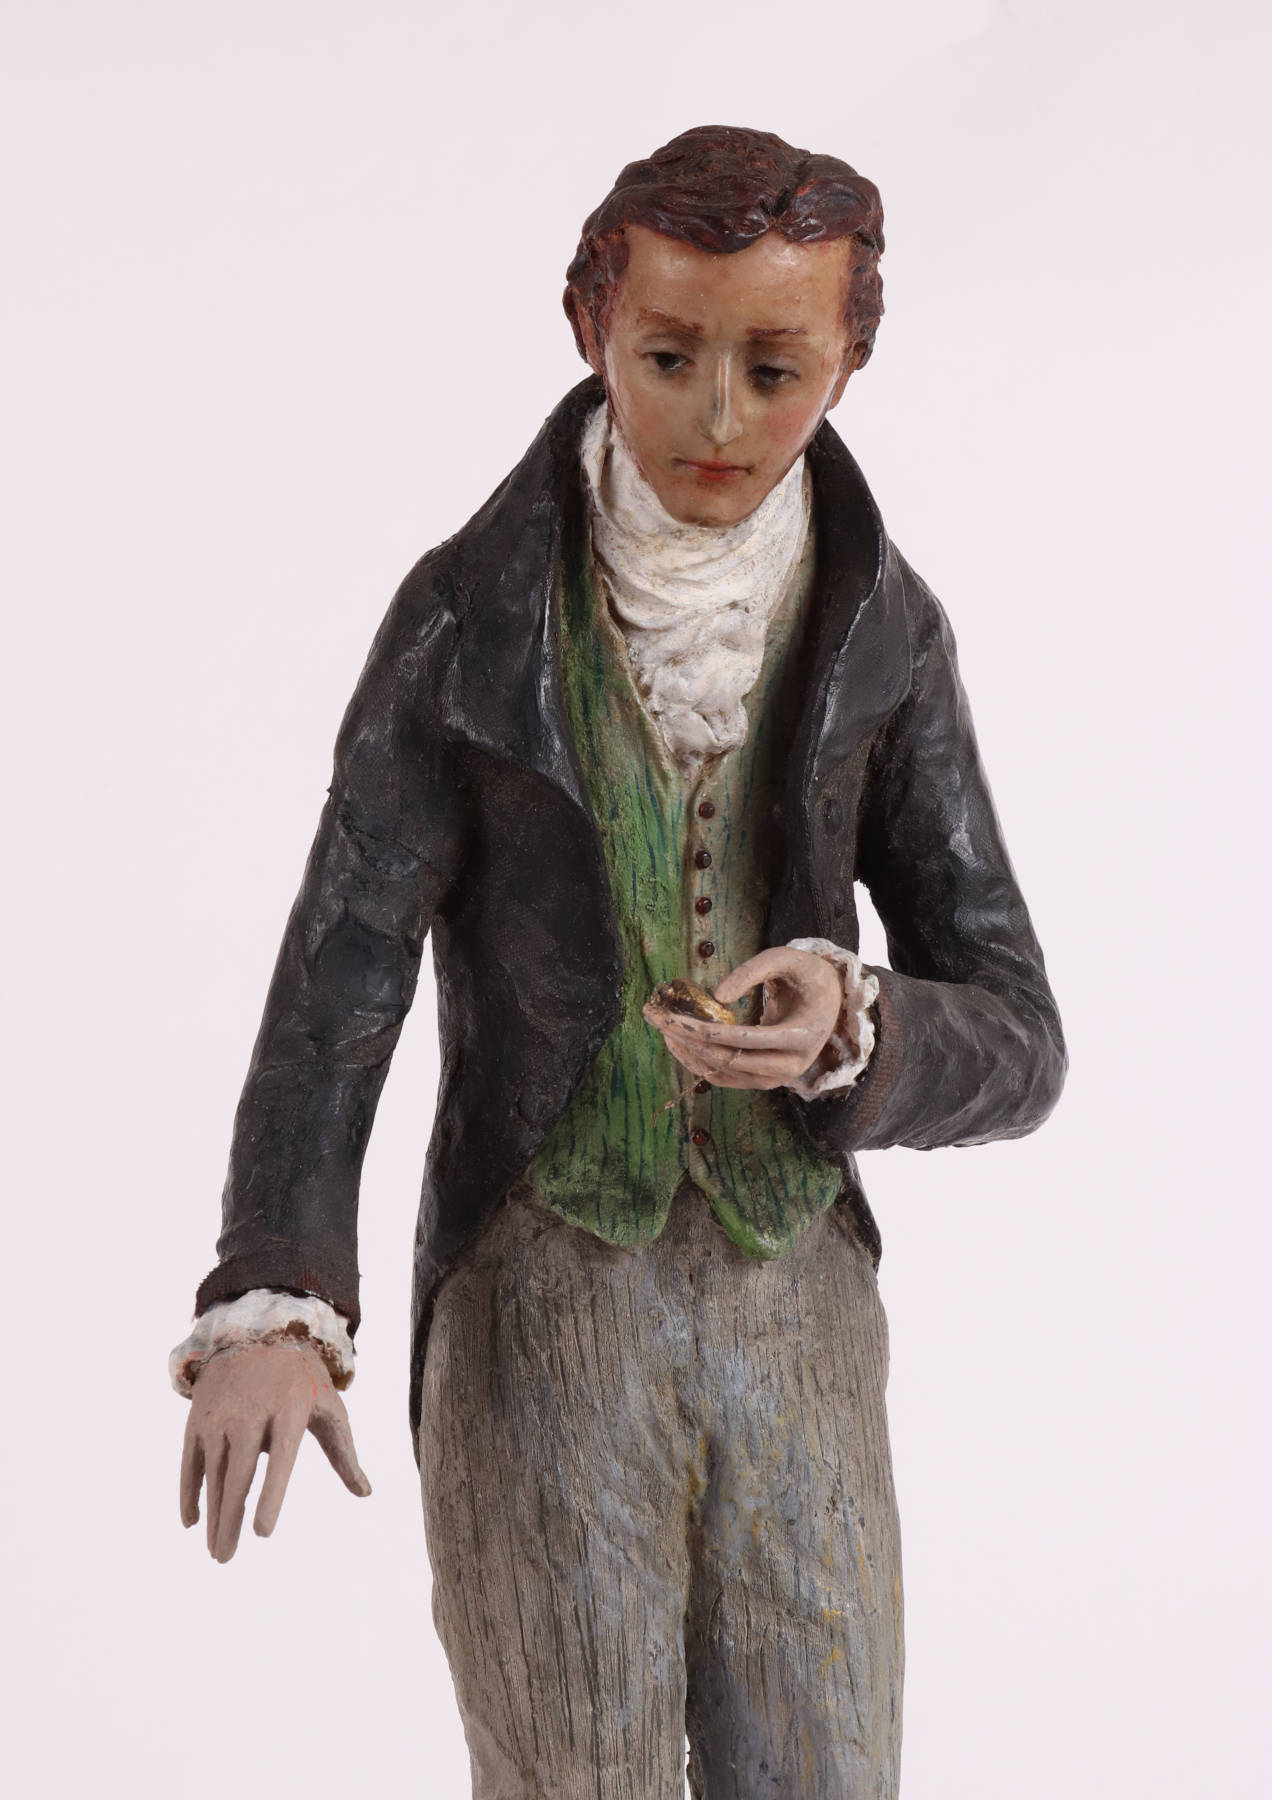 Wax Figure of a Gentleman with a Pocket Watch, c. 1820